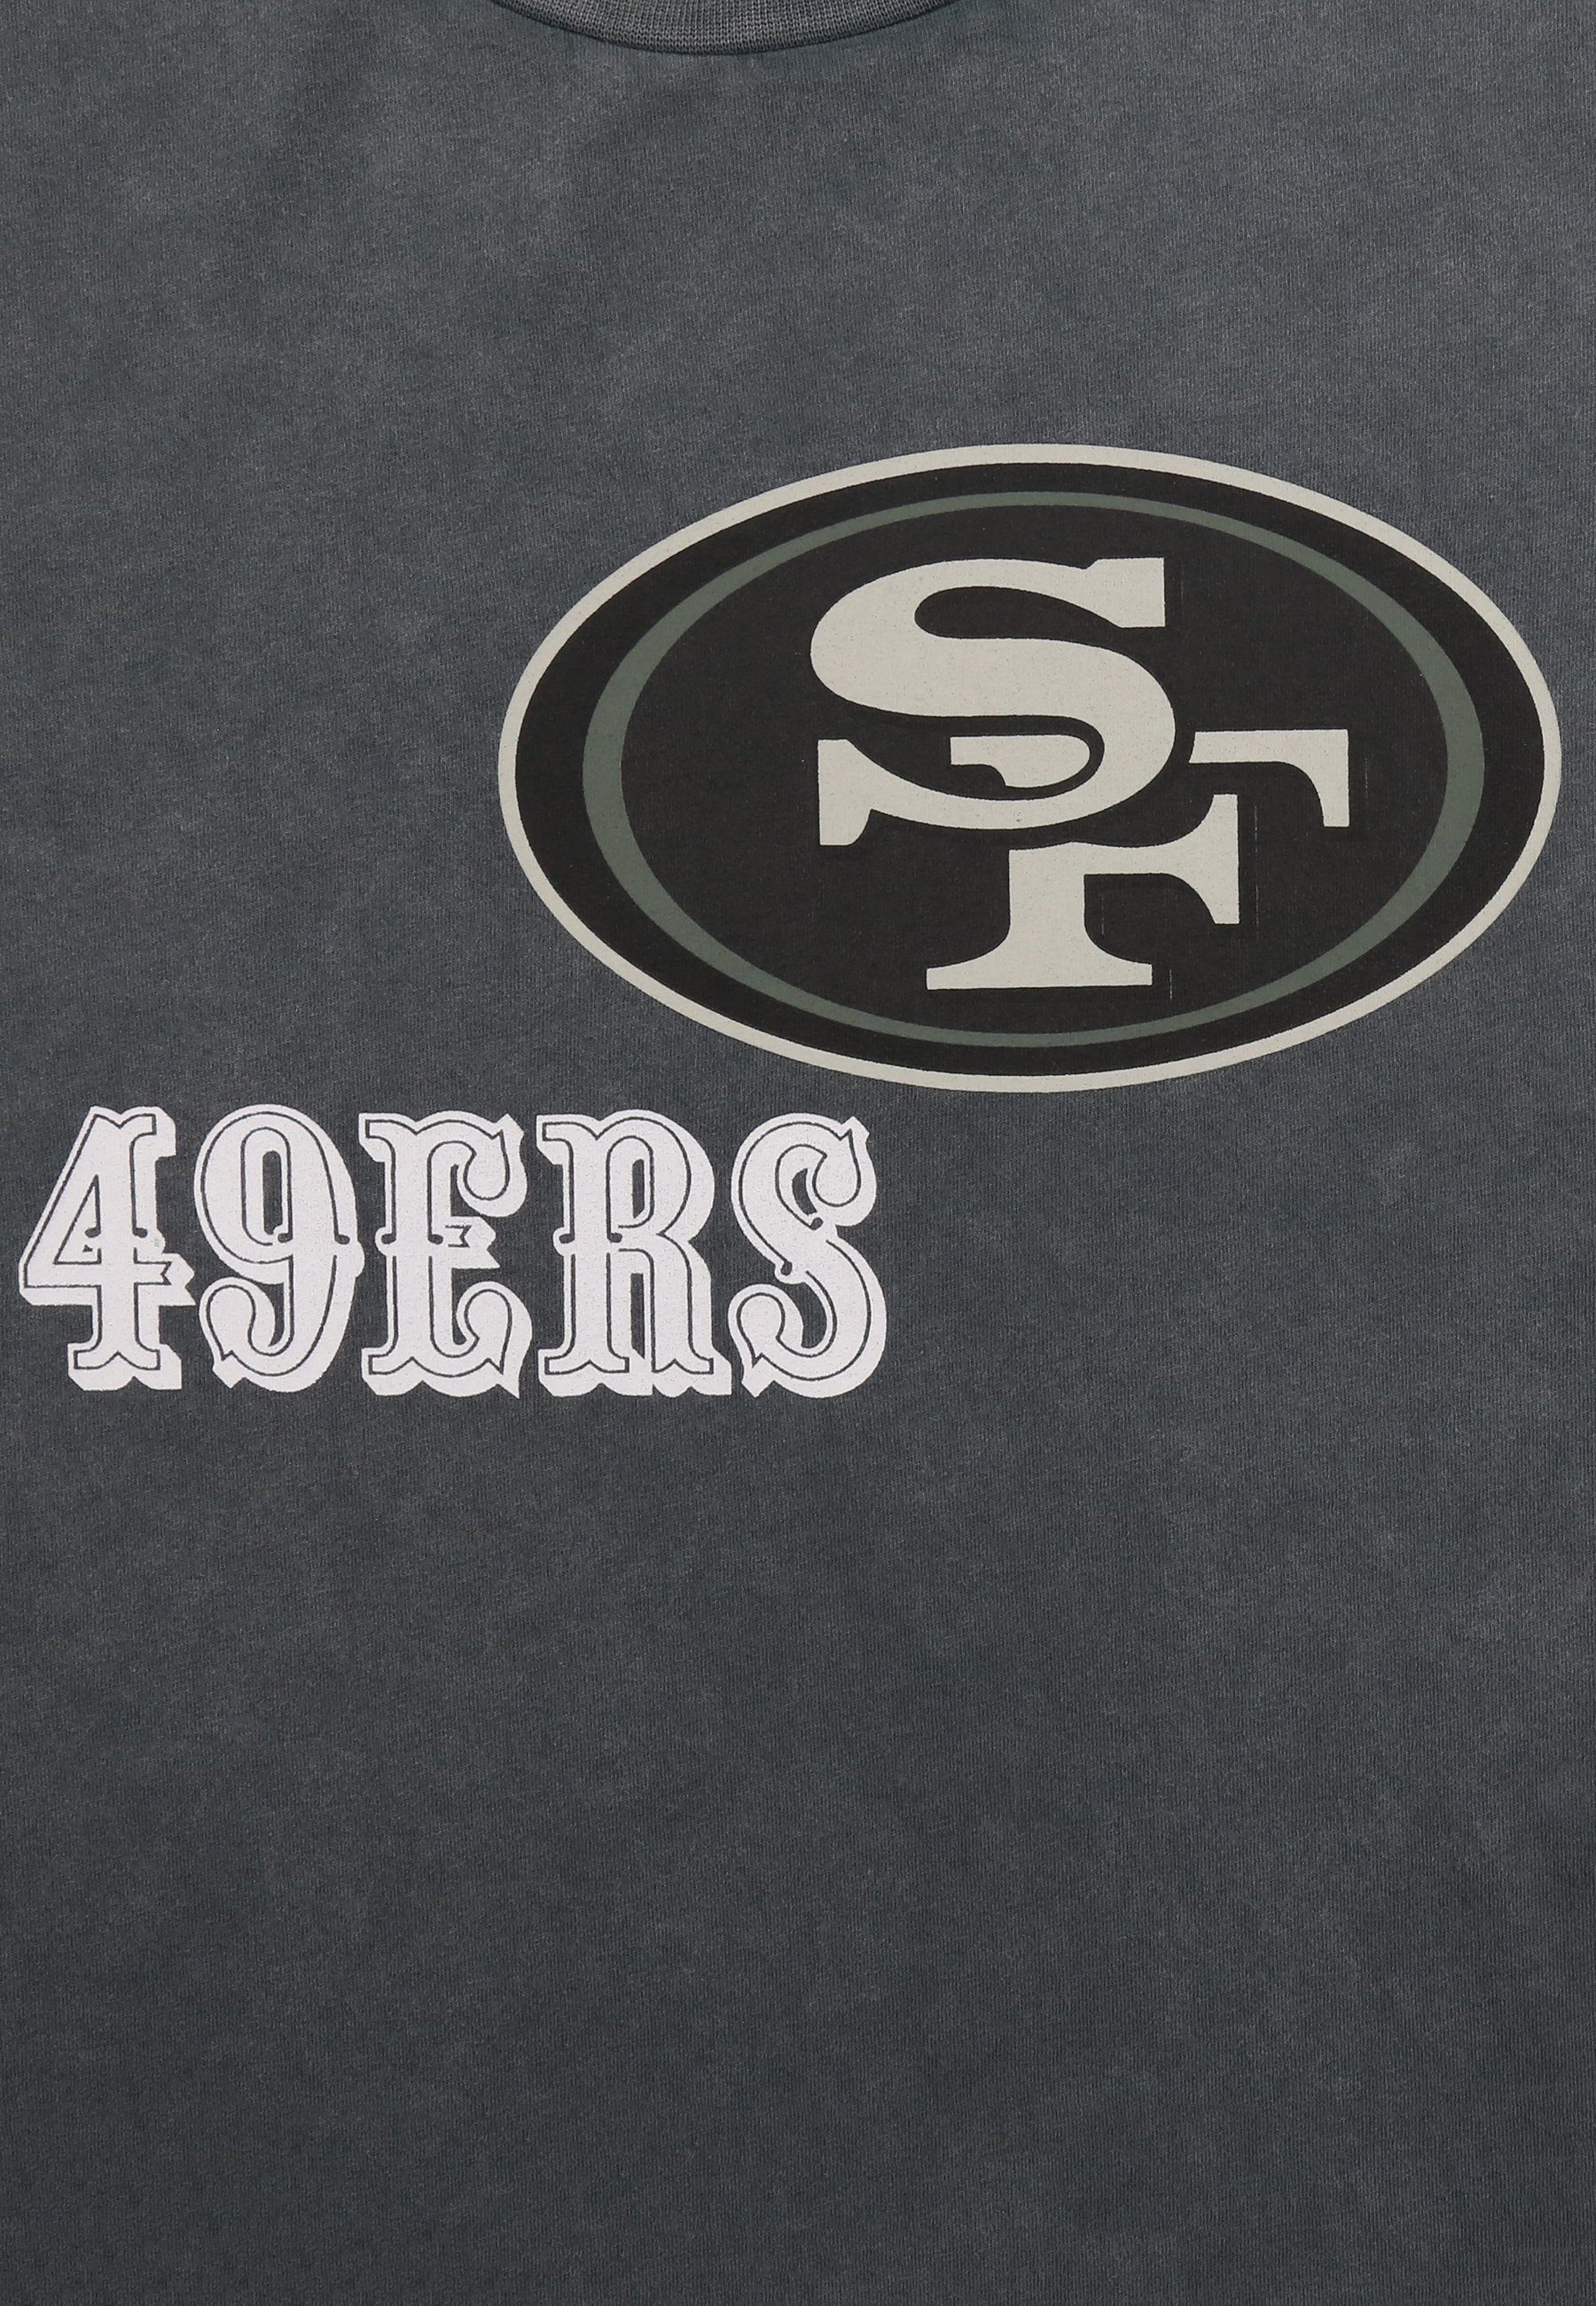 GOTS Bio-Baumwolle NFL MONOCHROME Recovered zertifizierte 49ERS T-Shirt